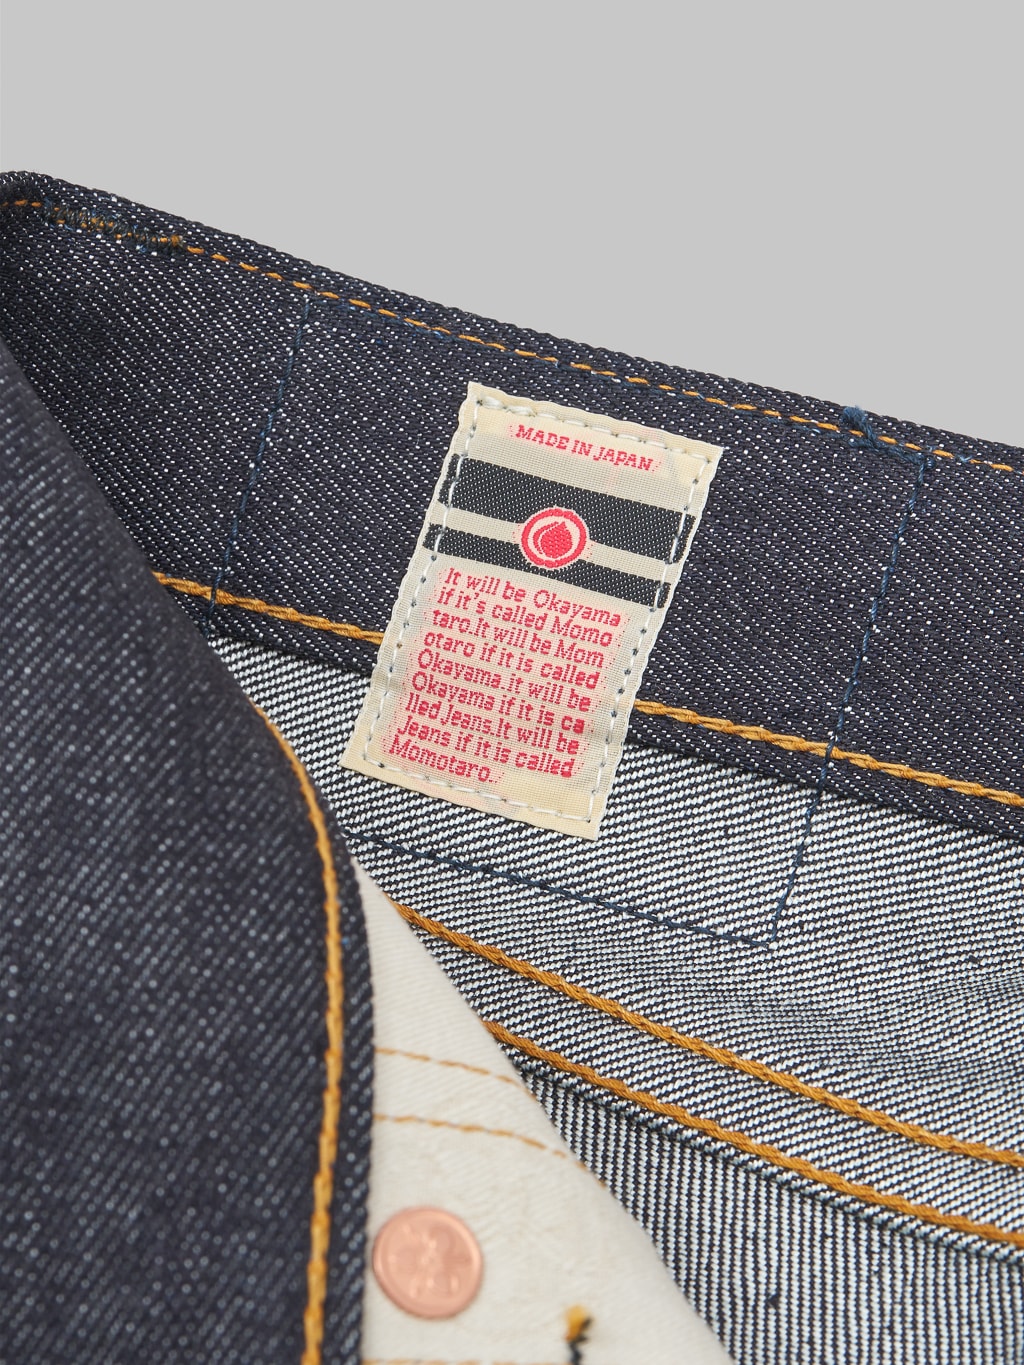 Momotaro 0605SILK Denim Natural Tapered Jeans interior tag